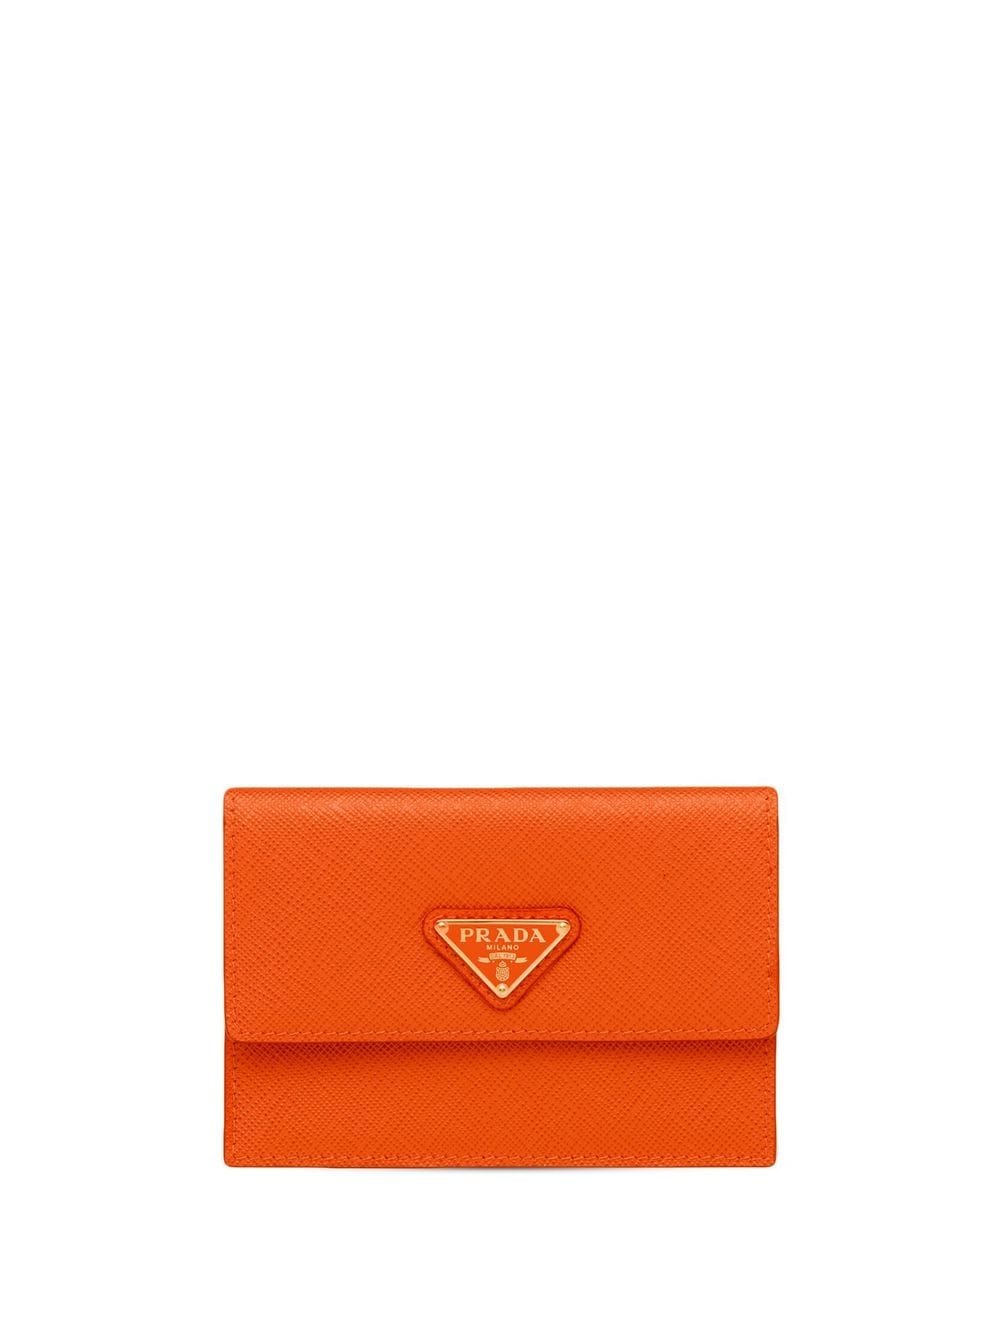 Prada logo saffiano leather briefcase - Orange von Prada